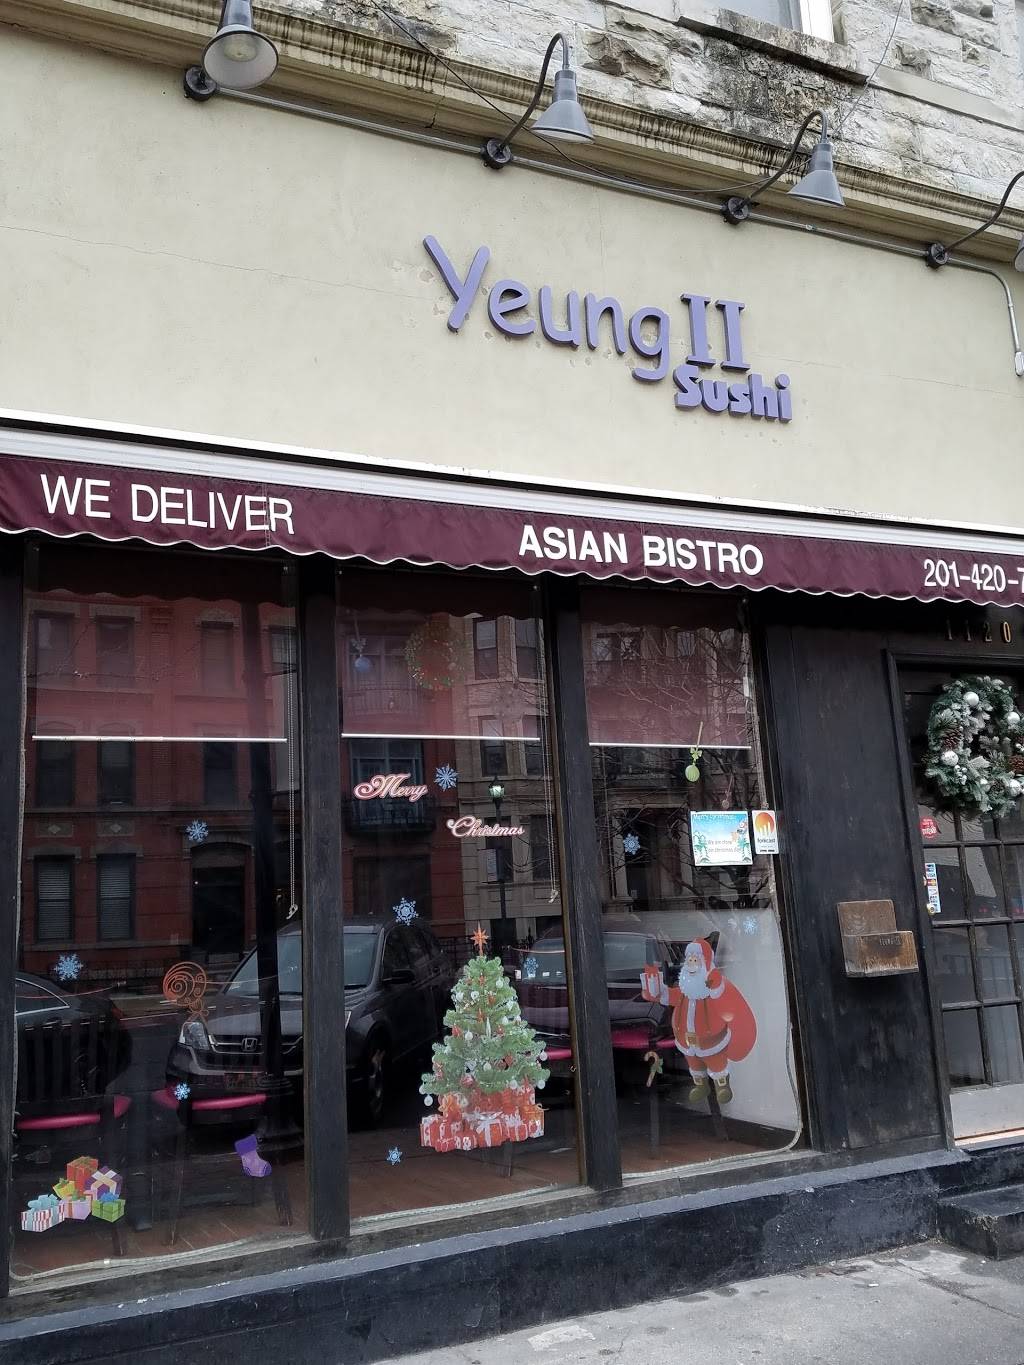 Yeung II Sushi Asian Cuisine | restaurant | 5302, 1120 Washington St, Hoboken, NJ 07030, USA | 2014207197 OR +1 201-420-7197